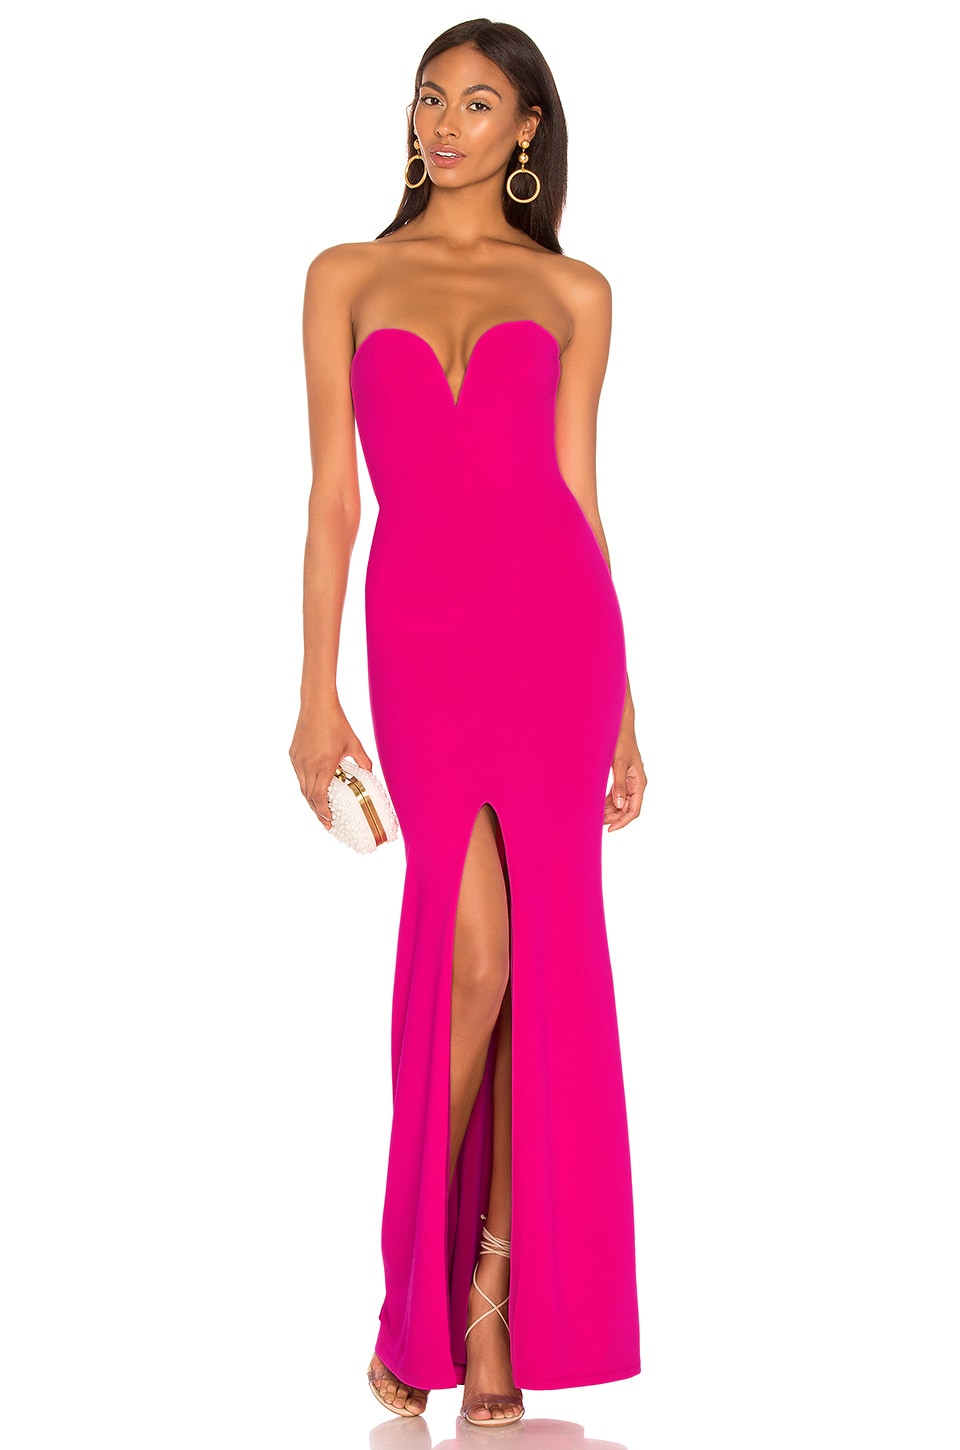 revolve pink strapless dress